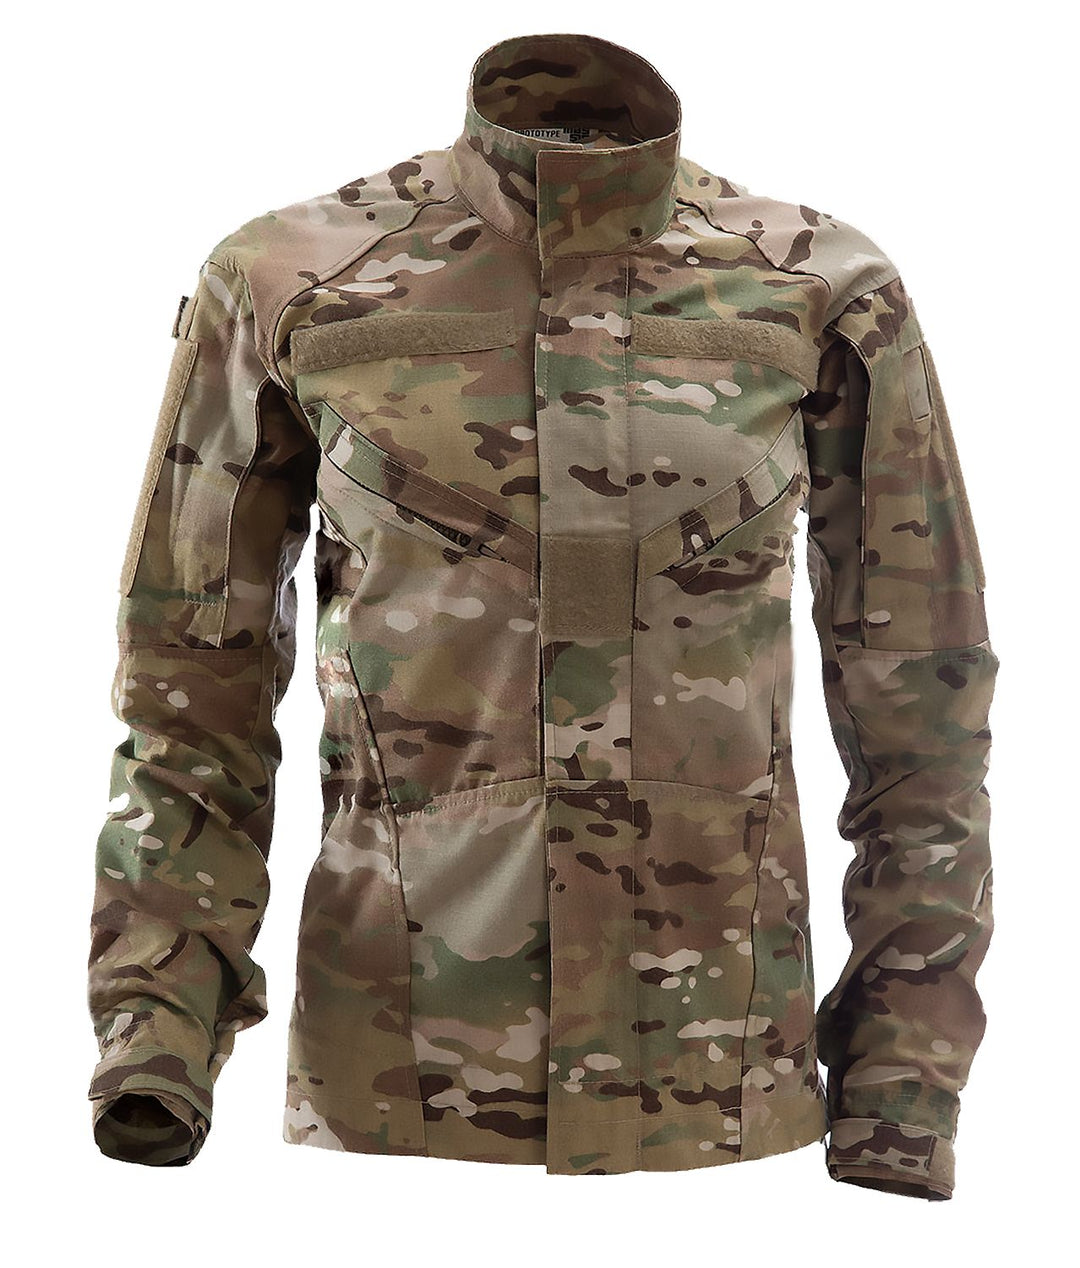 Apparel - Tops - Uniform - MASSIF 2-Piece Women's Fit FR Flight Suit Jacket - Military